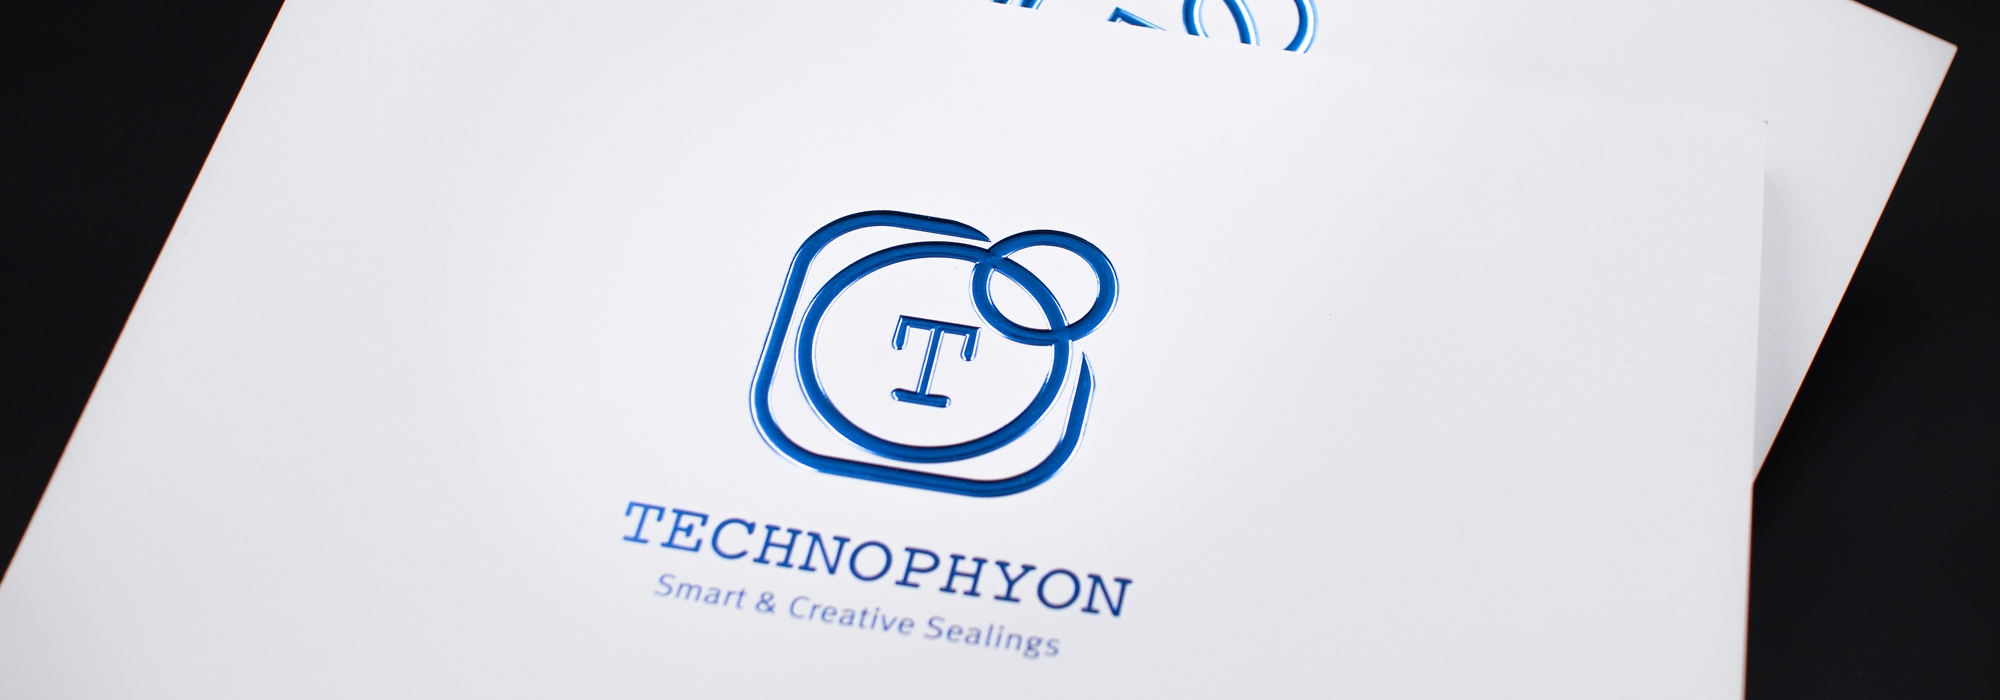 Technophyon Imagebroschüre